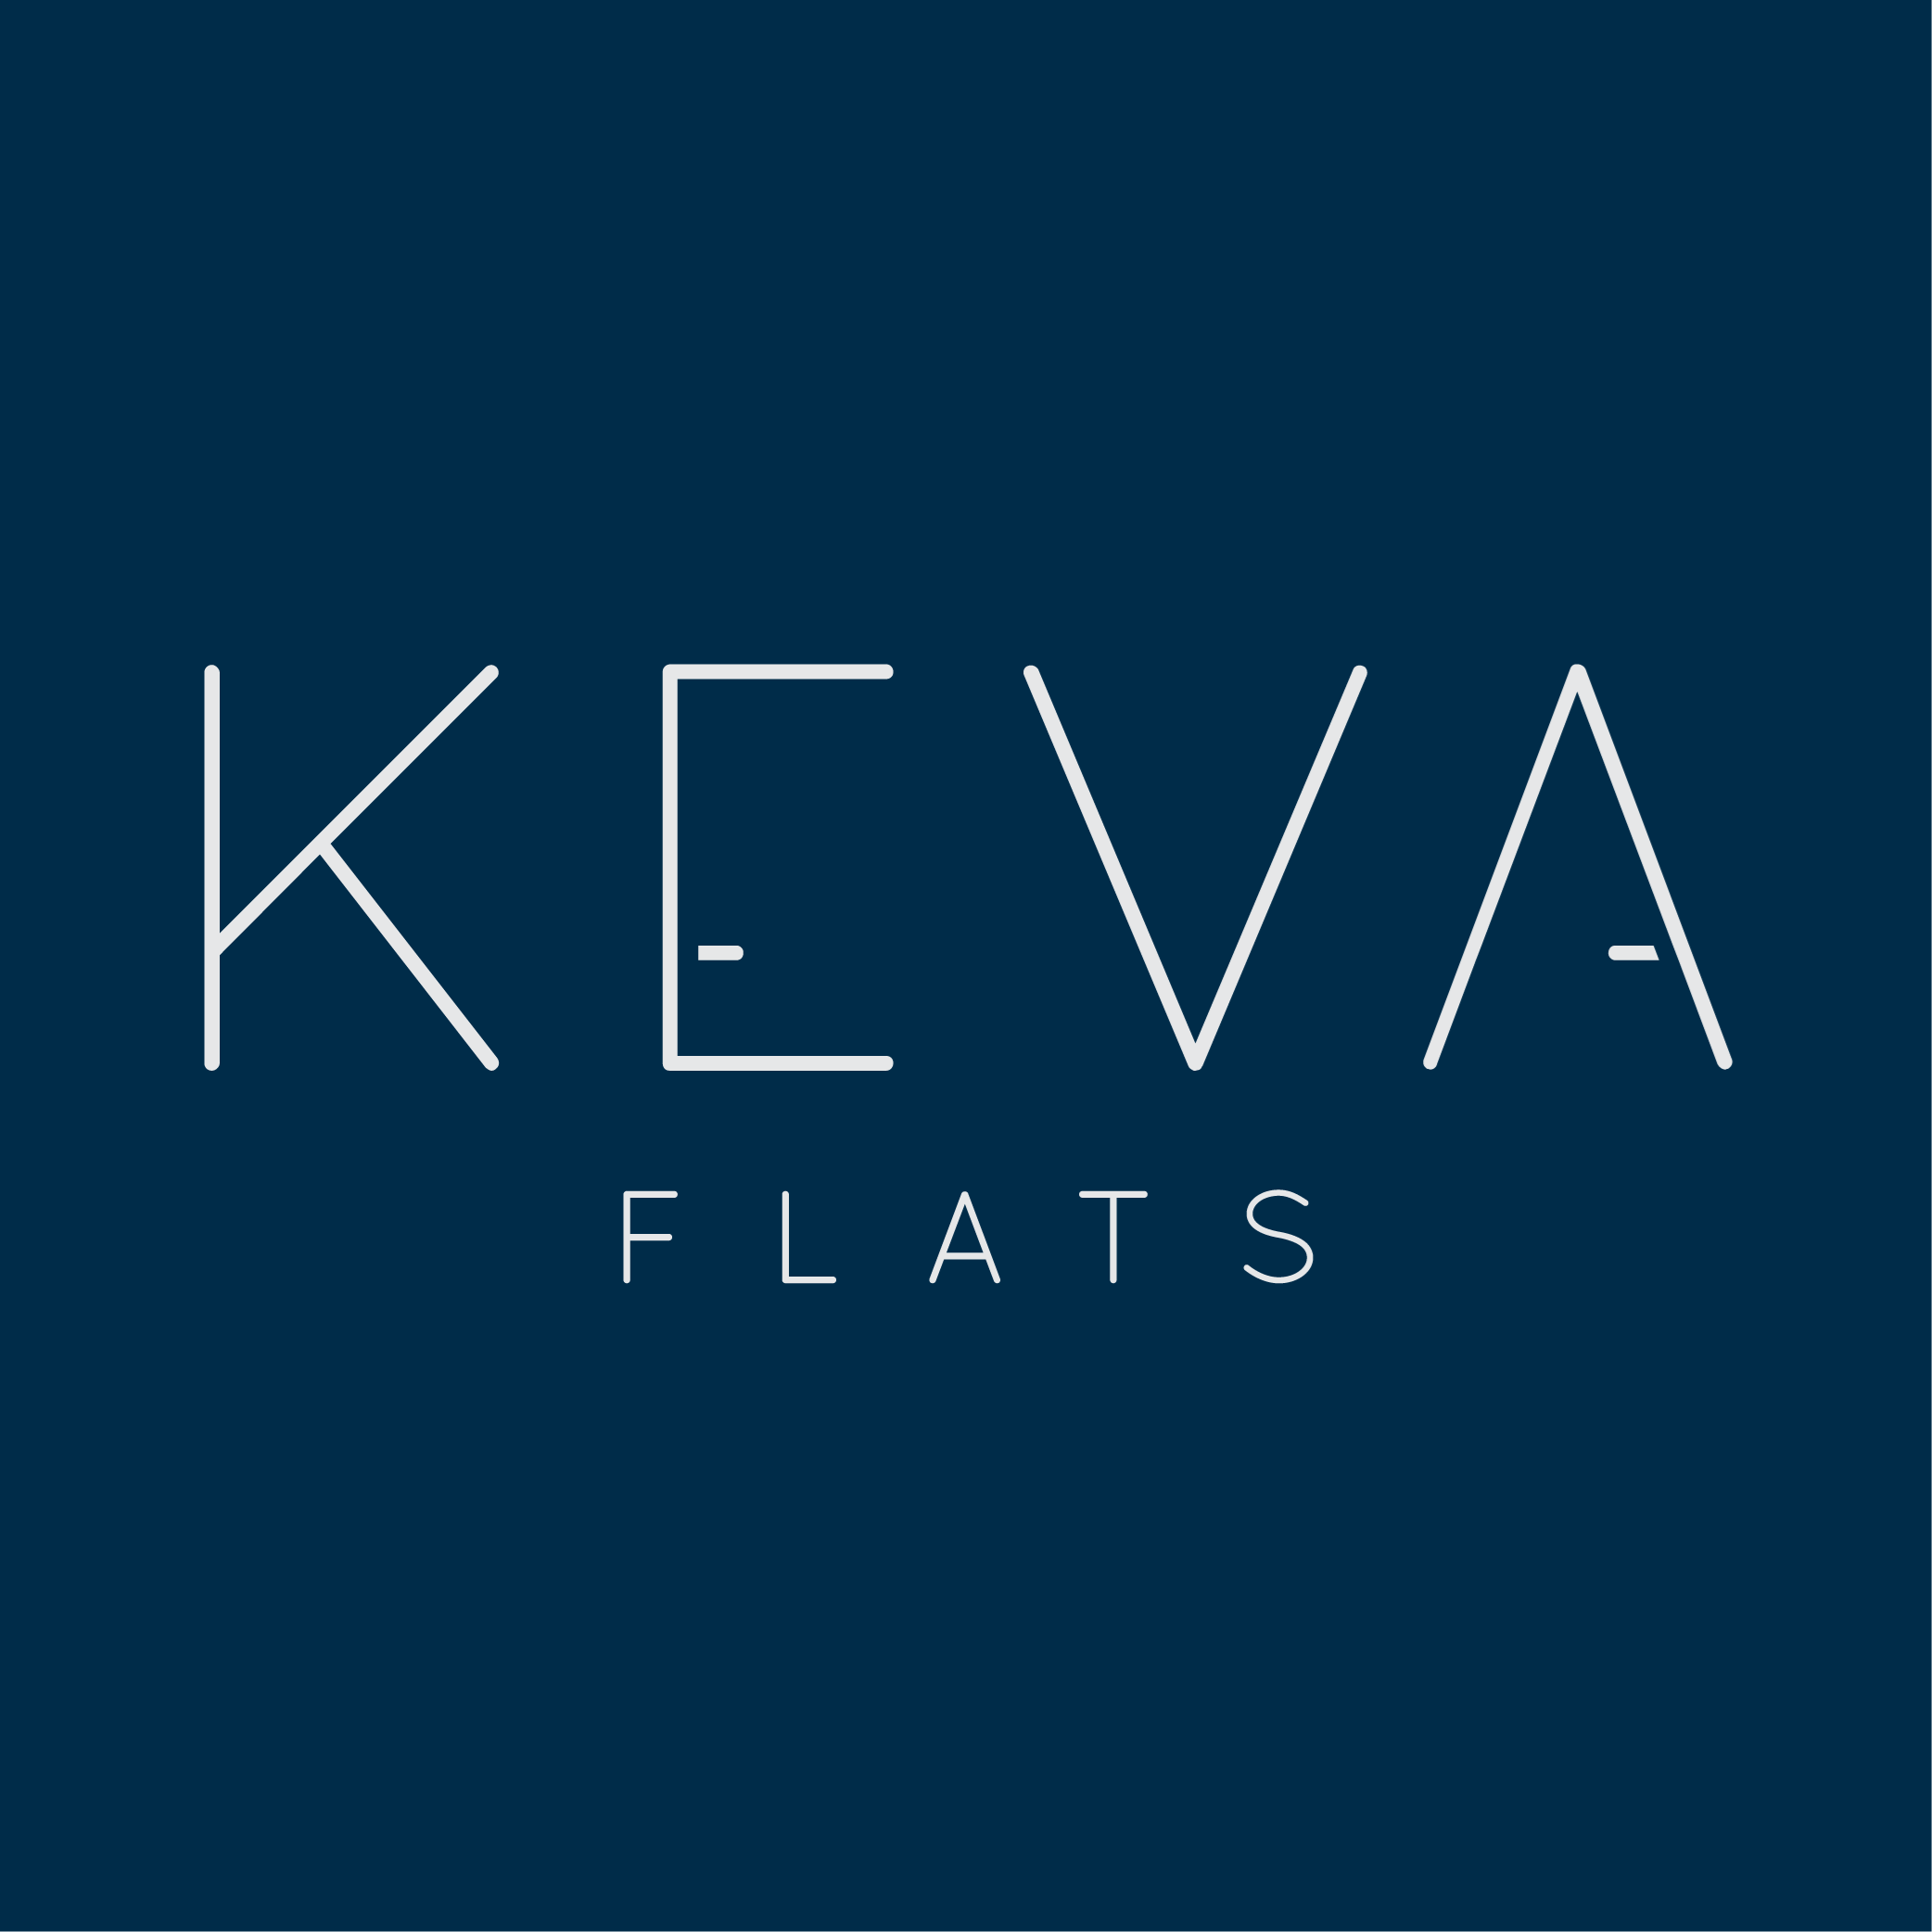 Keva-Flats-Logo